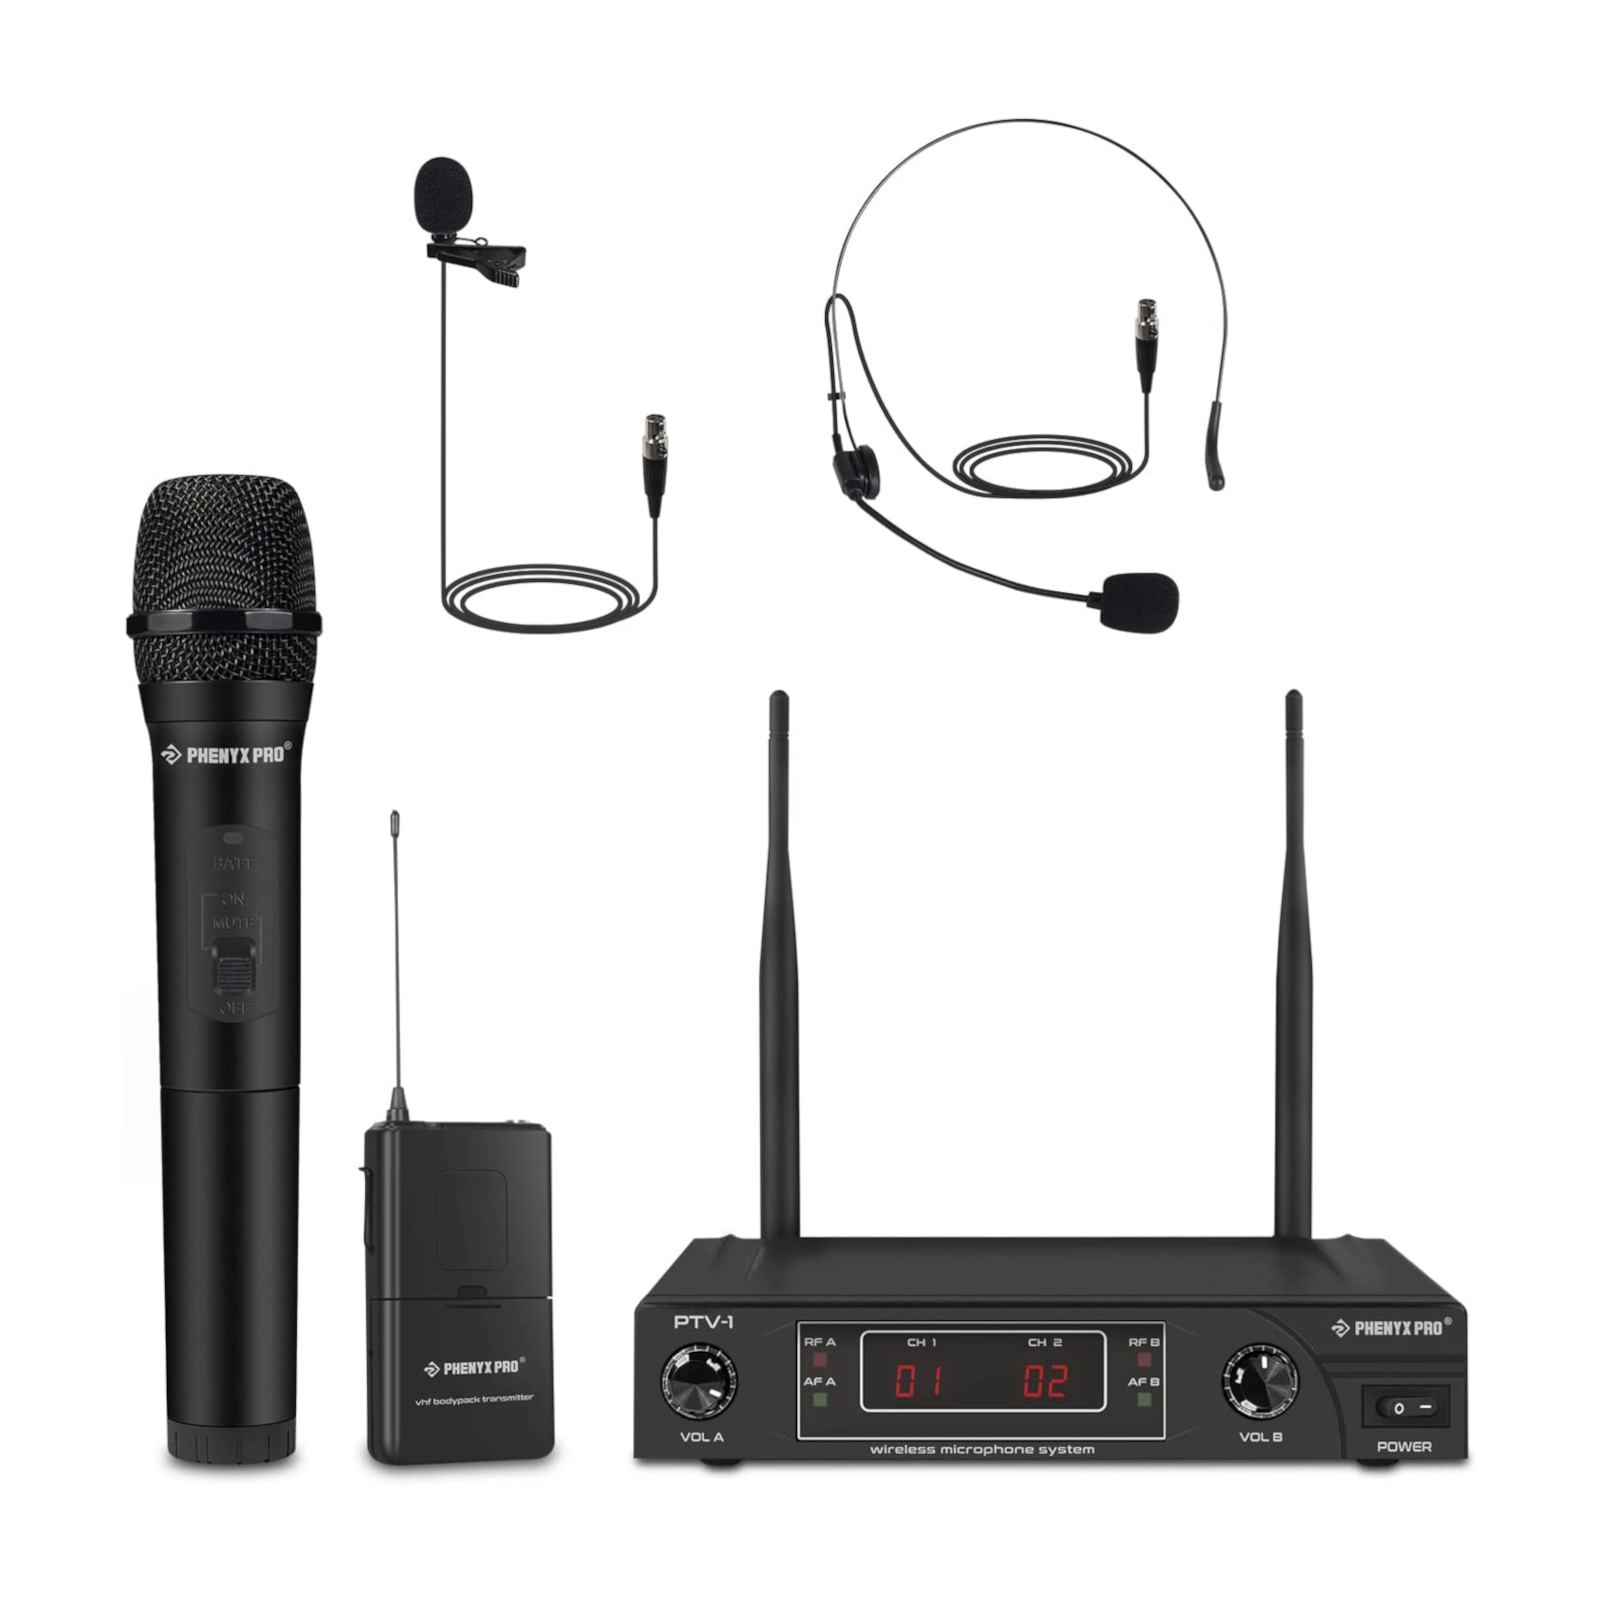 Aanklager Sluit een verzekering af Volg ons Phenyx Pro PTV-1D Dual VHF Wireless Microphone System